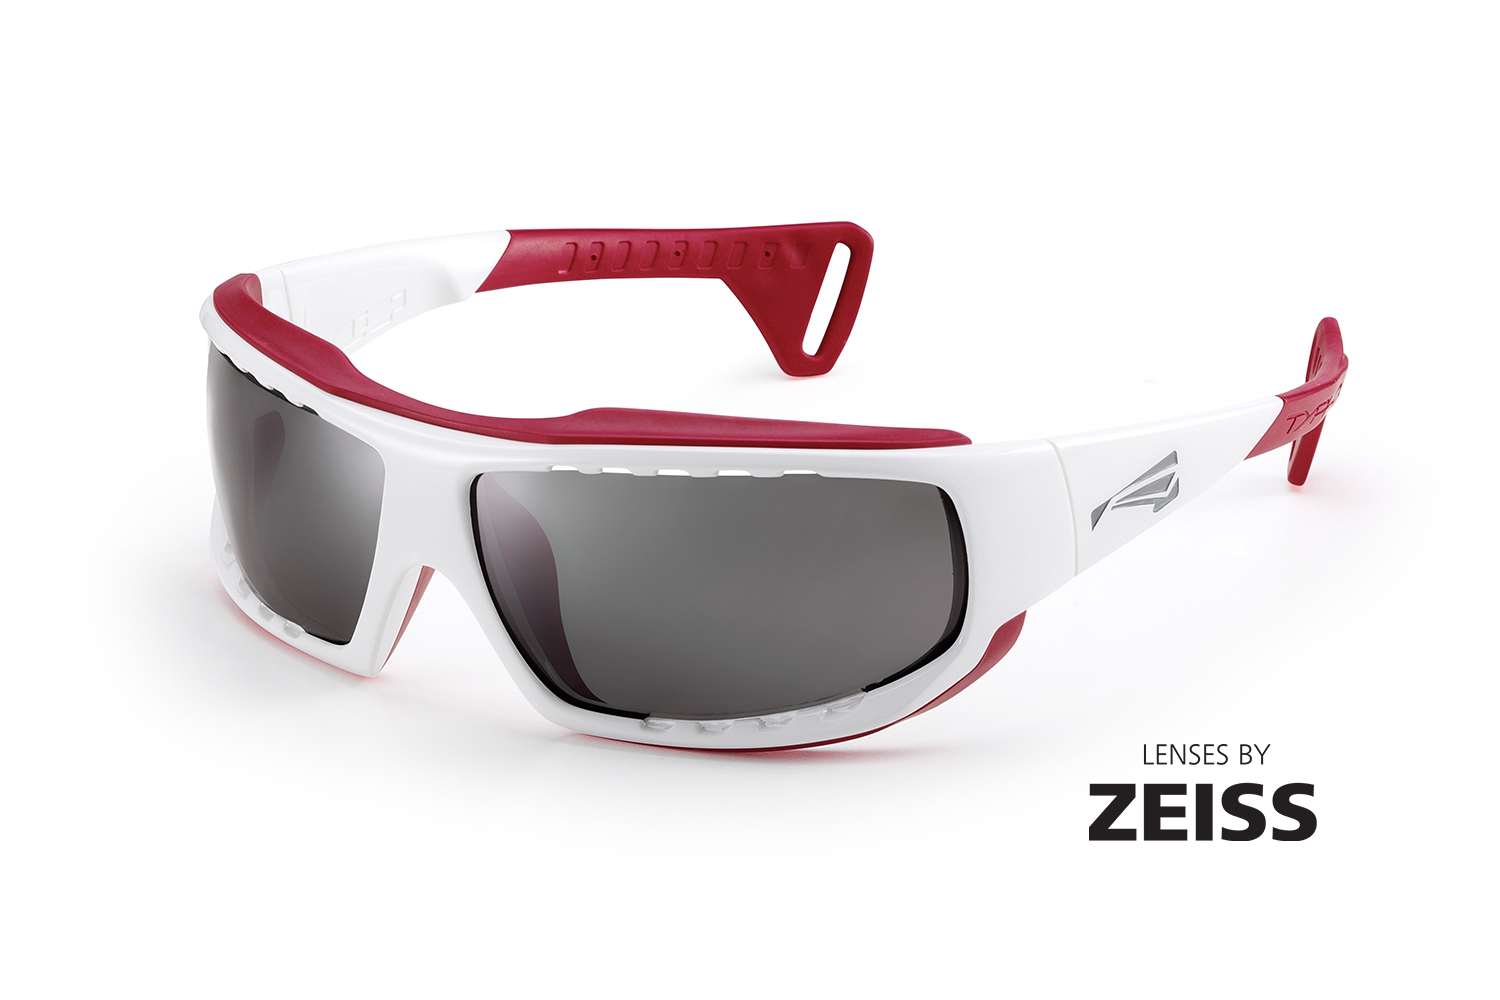 Купить Спортивные очки LiP Typhoon / Gloss White - Red / Zeiss / PA Polarized / Methane Smoke 7ft.ru в интернет магазине Семь Футов